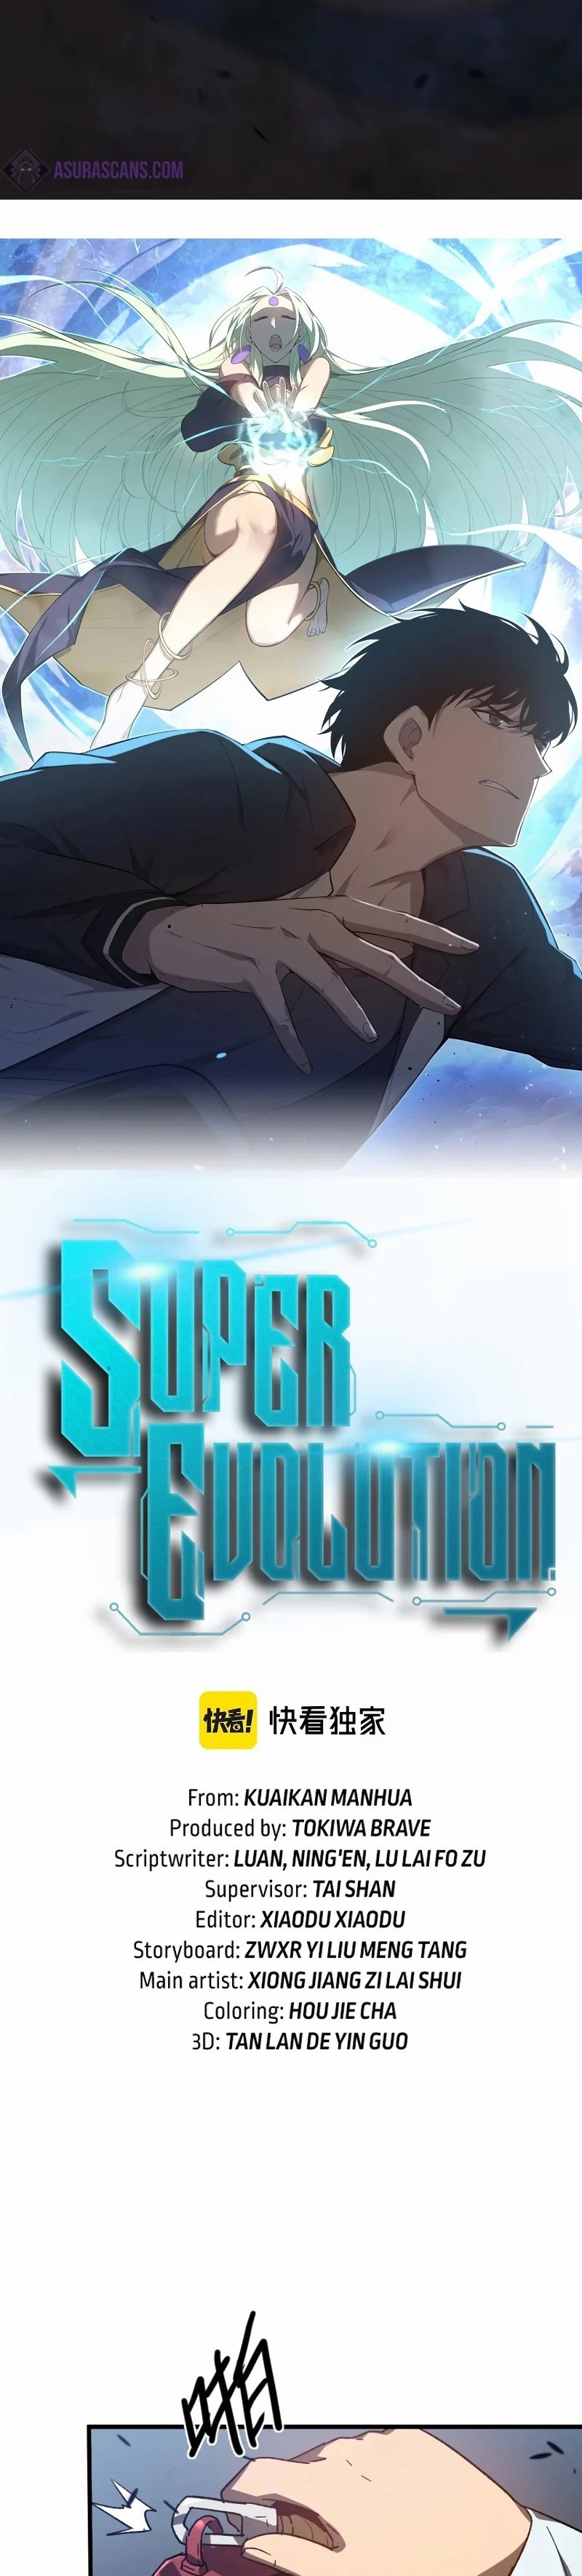 Super Evolution 86.02